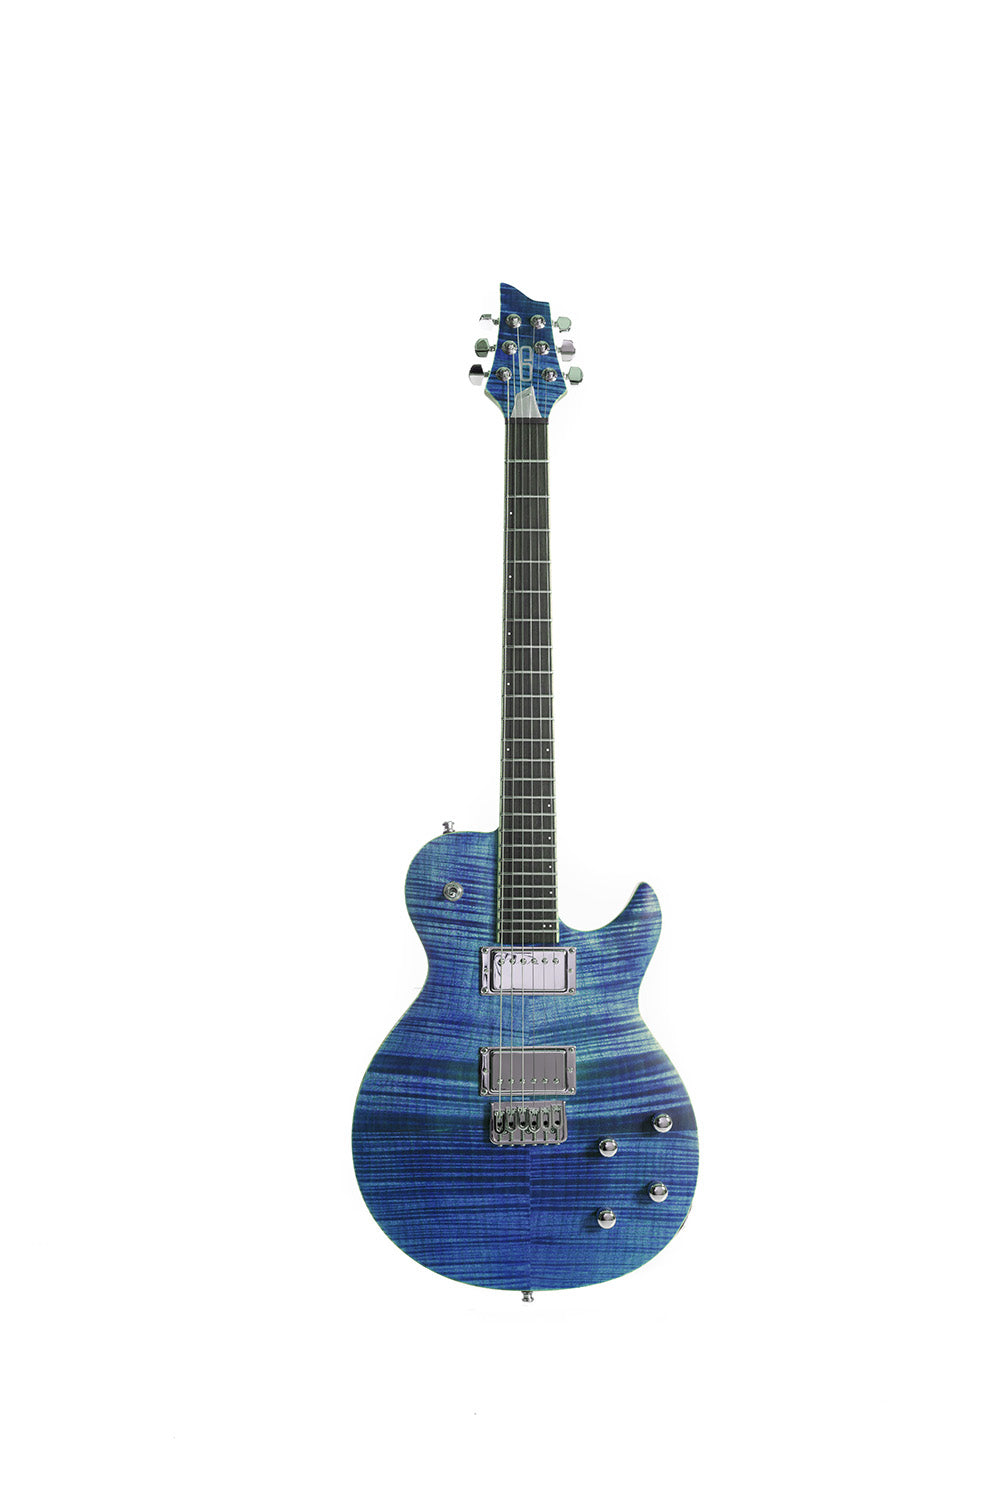 SC_Walnut_Maple_Deep_Blue_Front_De_Leeuw_Guitars_Paris_Made_in_France_Luthier_Guitar_Maker_France_Neck_Through_Manche_Traversant